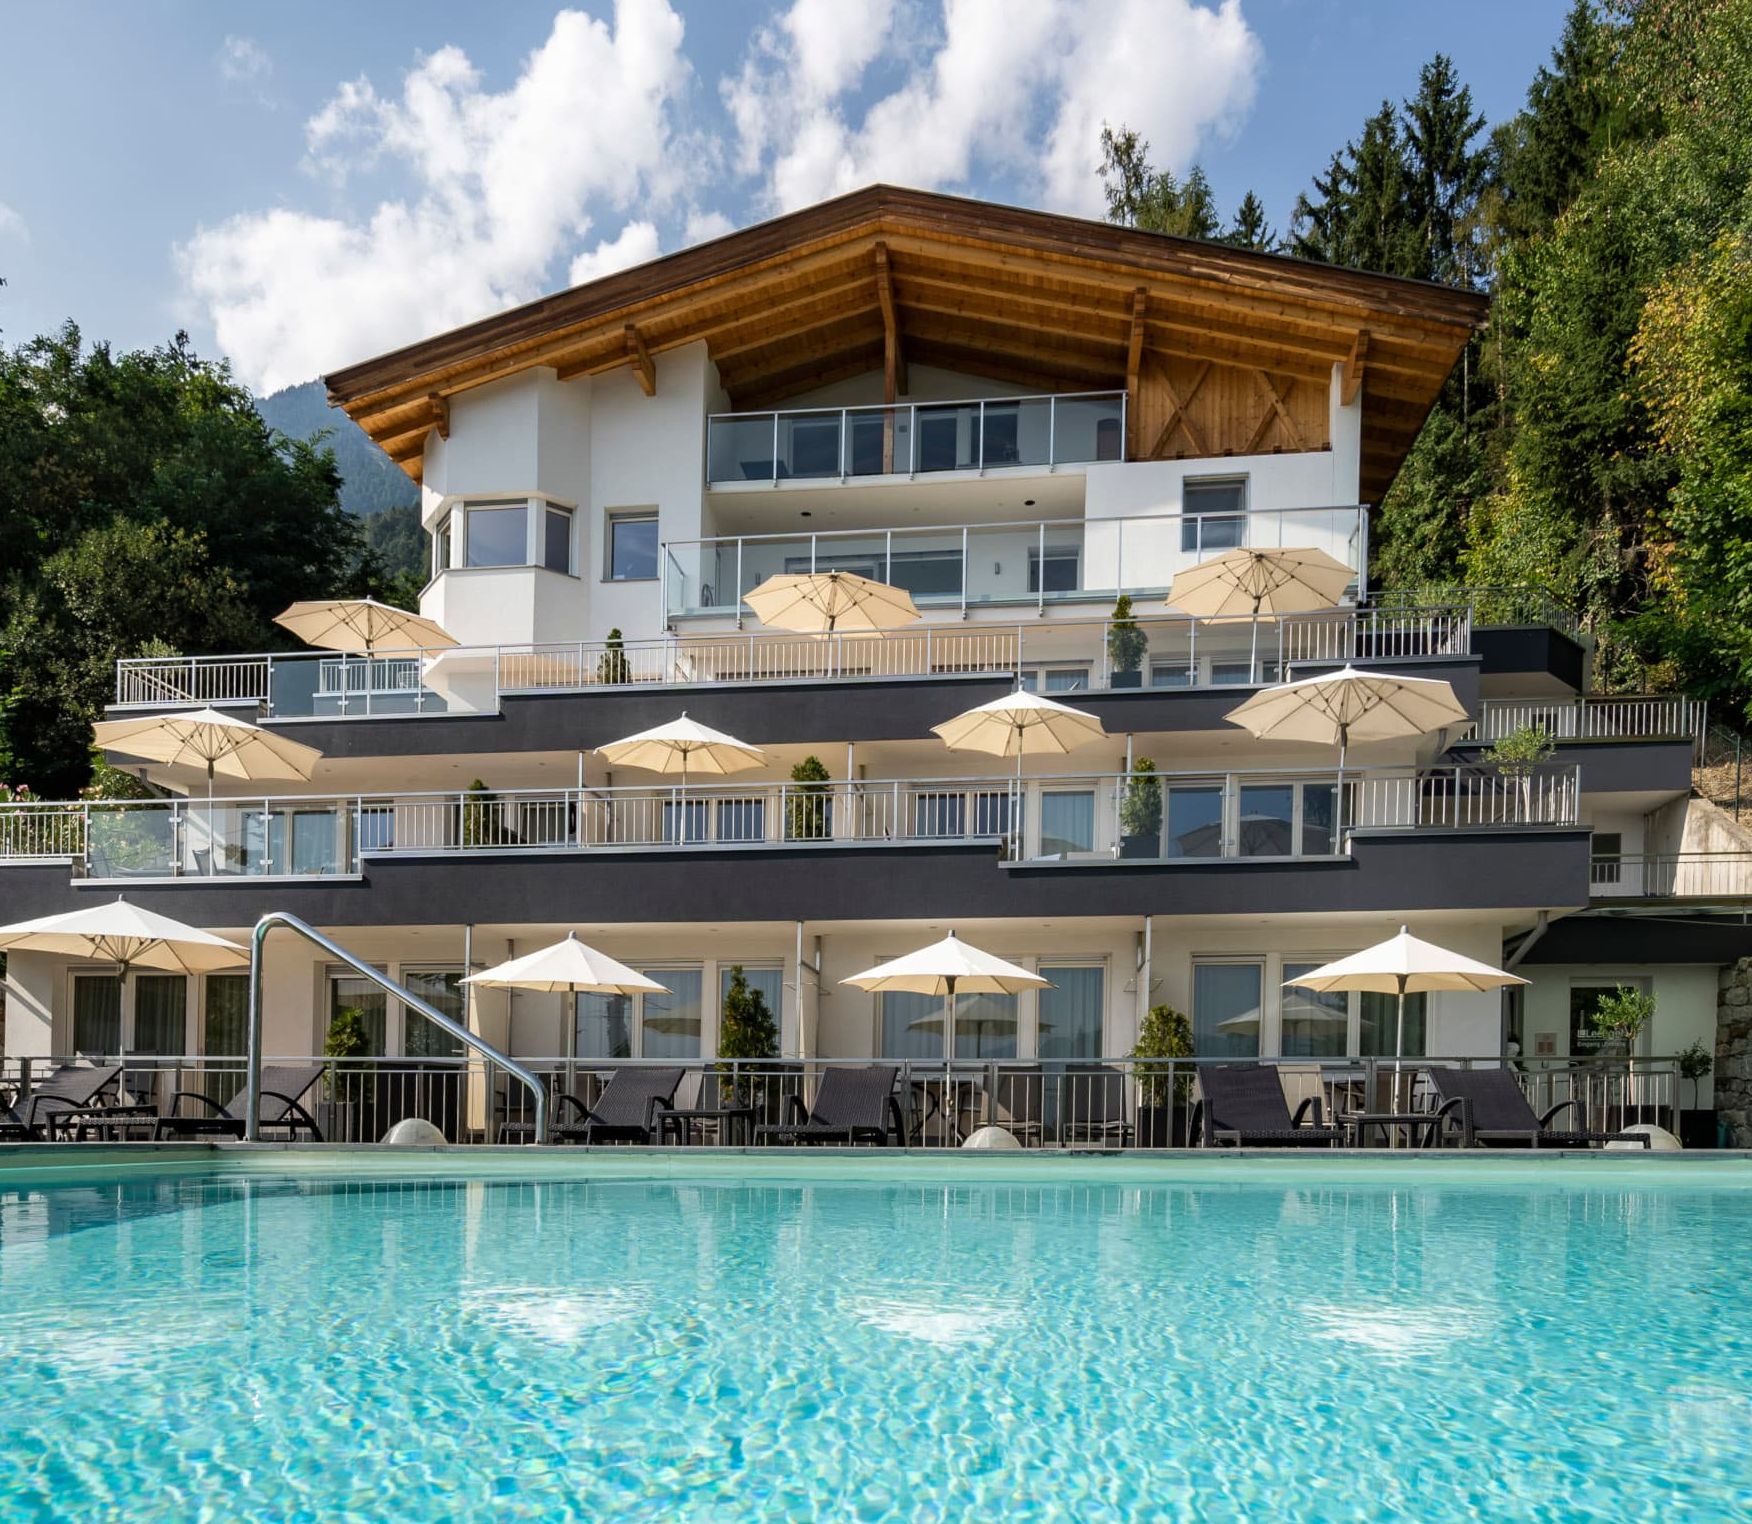 Urlaub Dorf Tirol Residence Lechner Pool Residence-lechner-schwimmbad-ferienwohnungen-dorf-tirol.jpg